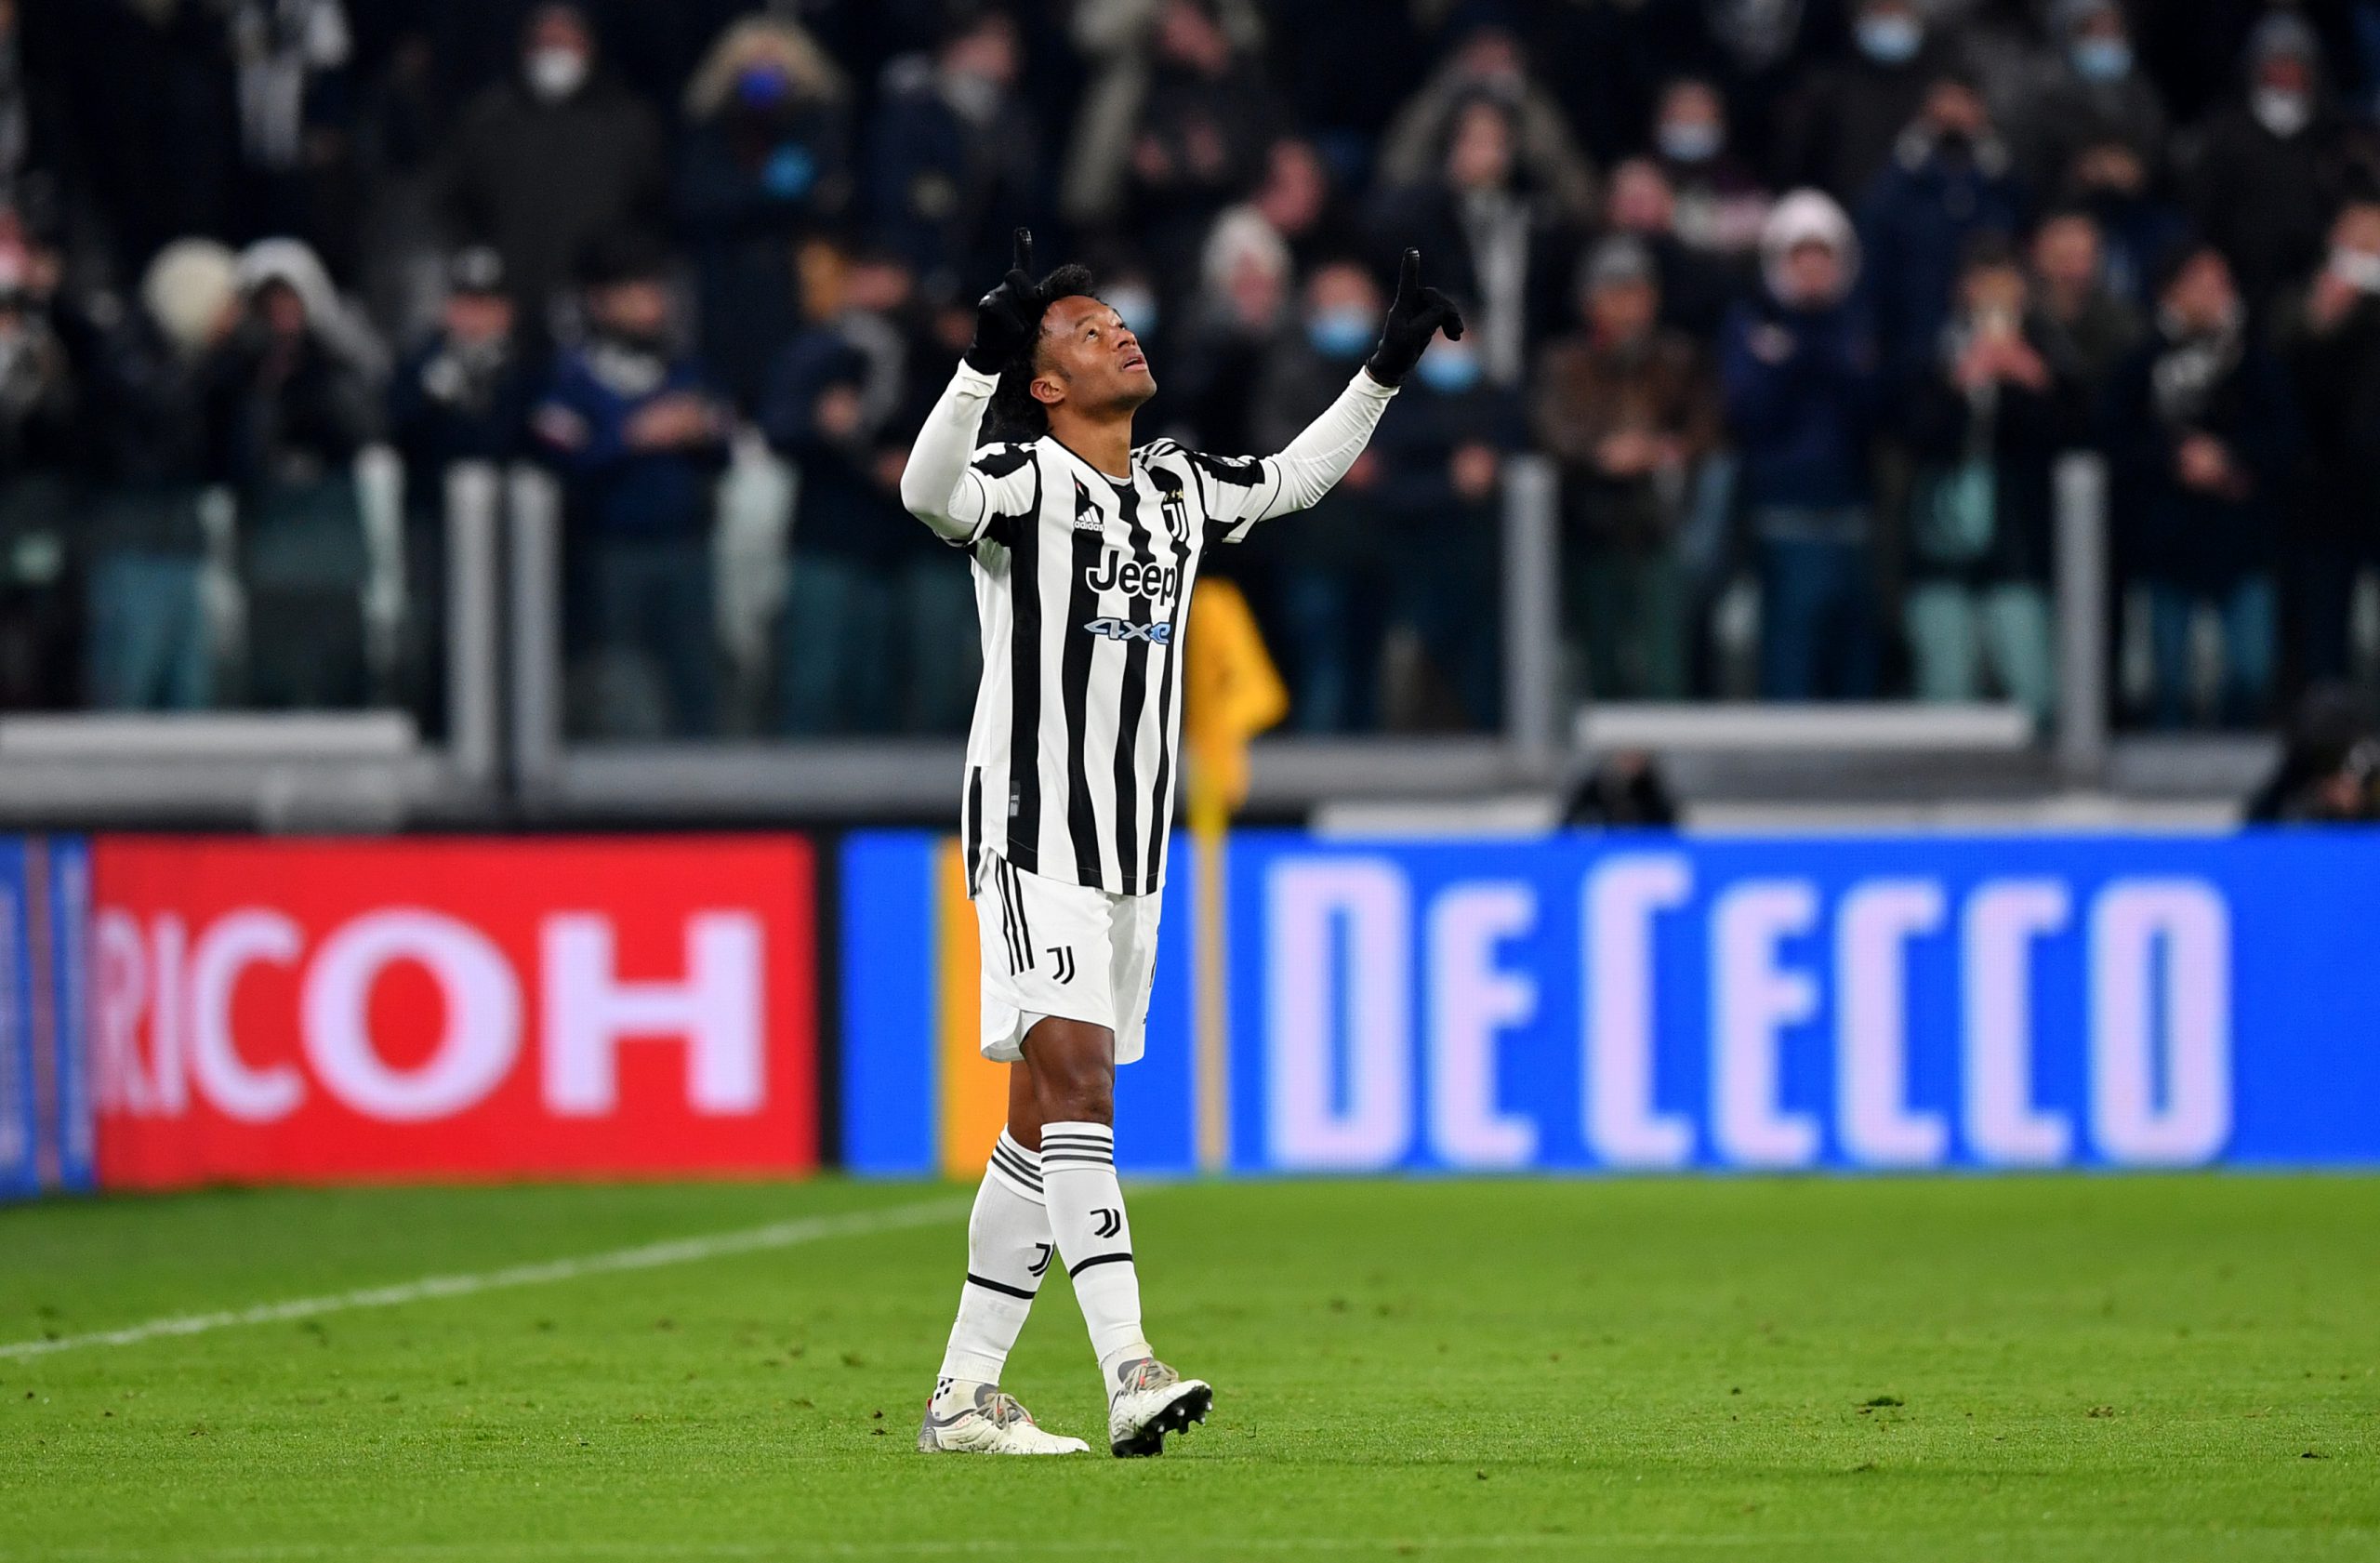 VIDEO - Juventus Genoa 2-0, Serie A: gol e highlights della partita